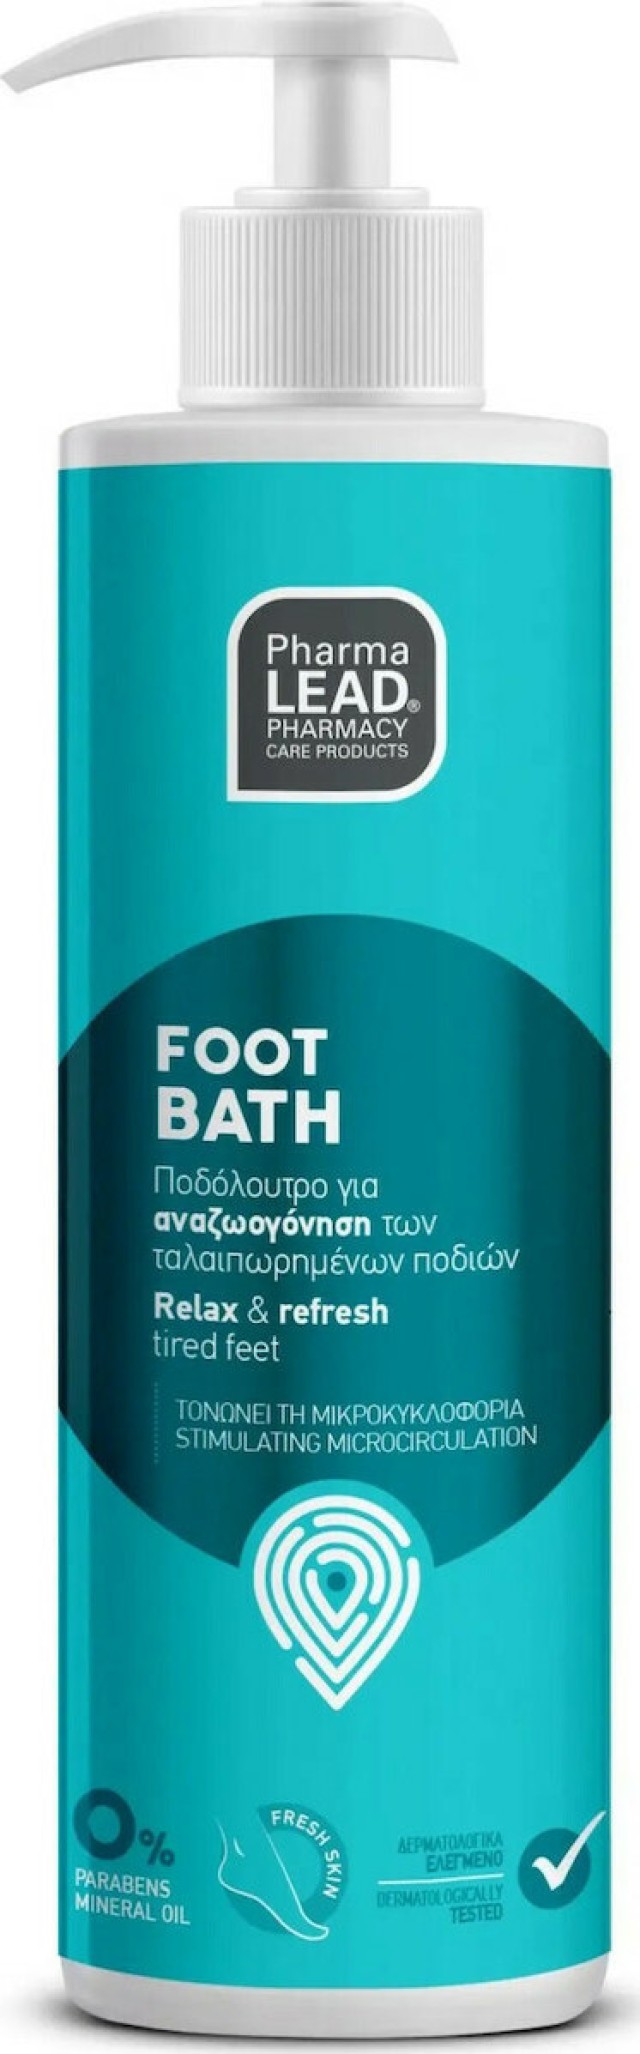 PharmaLead Foot Bath Ποδόλουτρο για Αναζωογόνηση των Κουρασμένων και Ταλαιπωρημένων Ποδιών 150ml με Αντλία